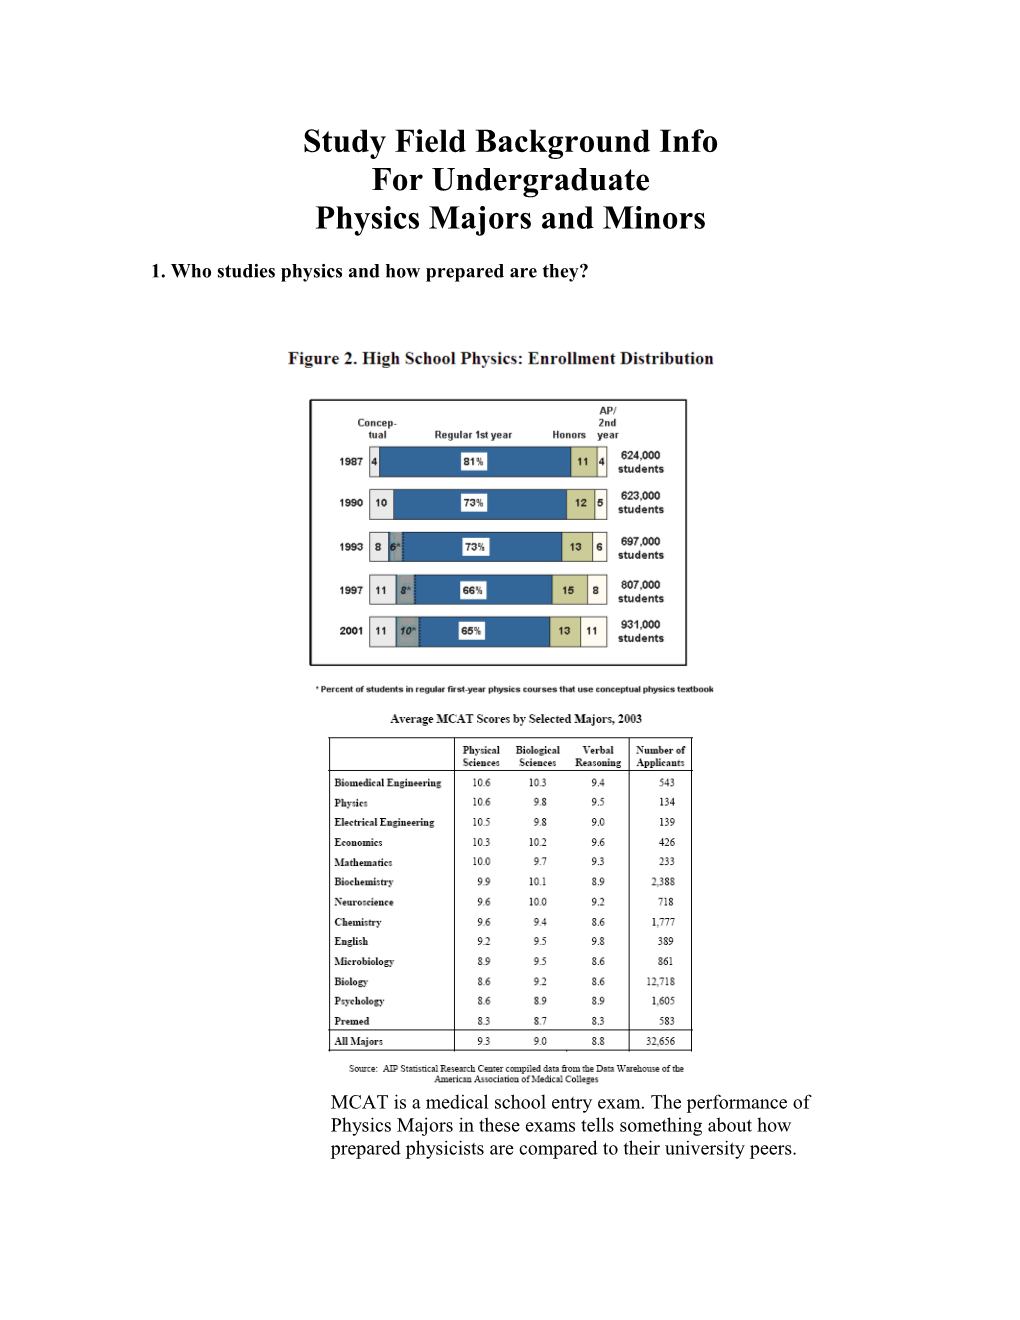 Physics Majors and Minors